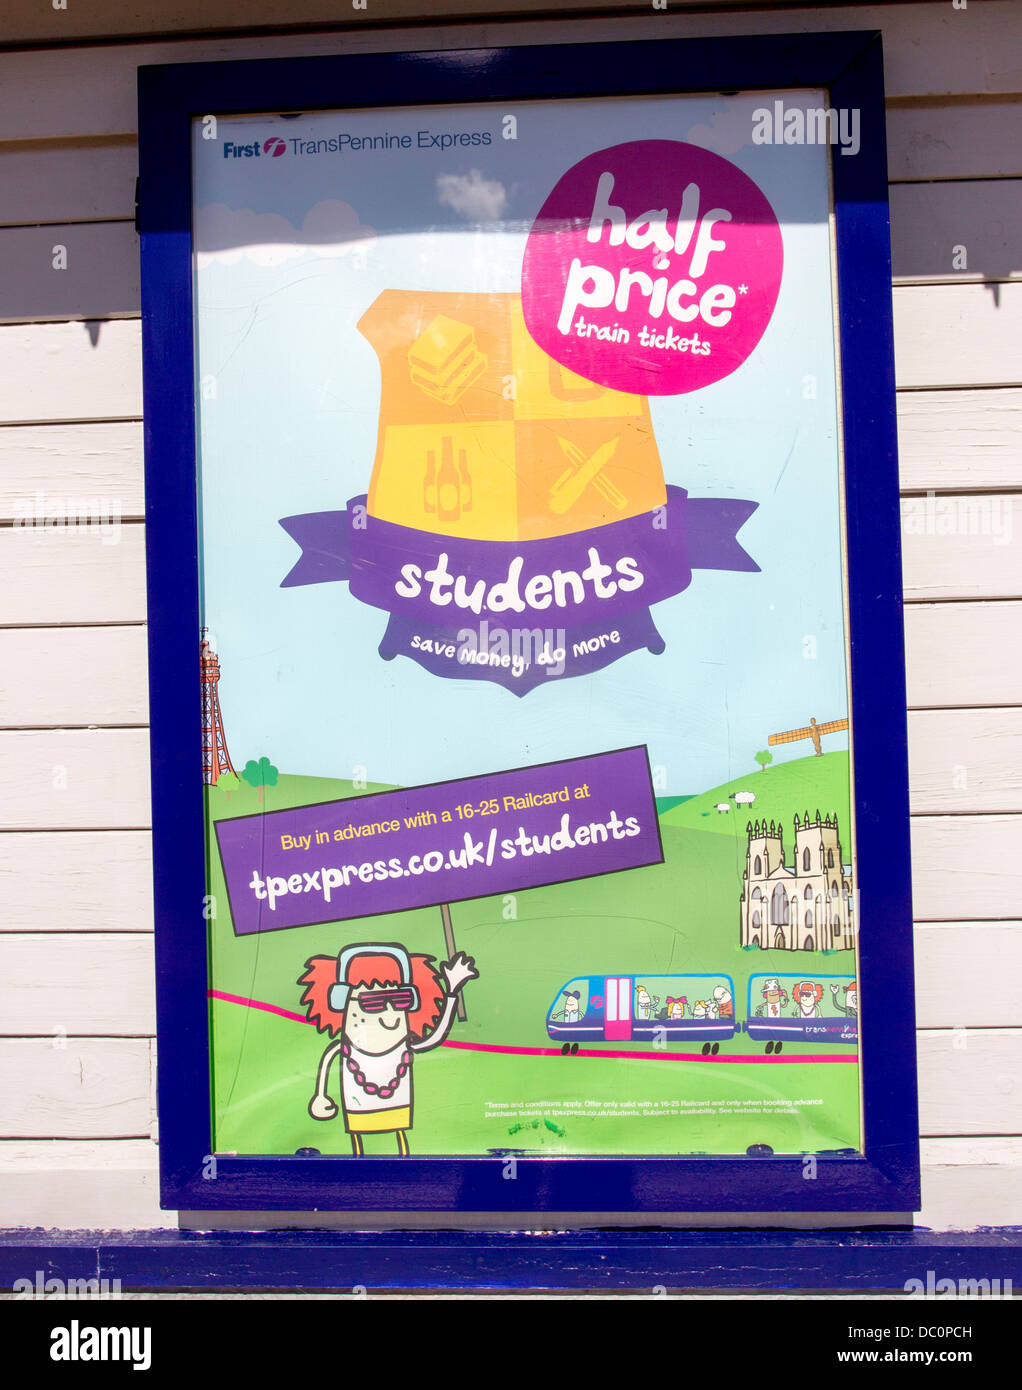 Windermere railway station half price student rail tickets advert poster Stock Photo